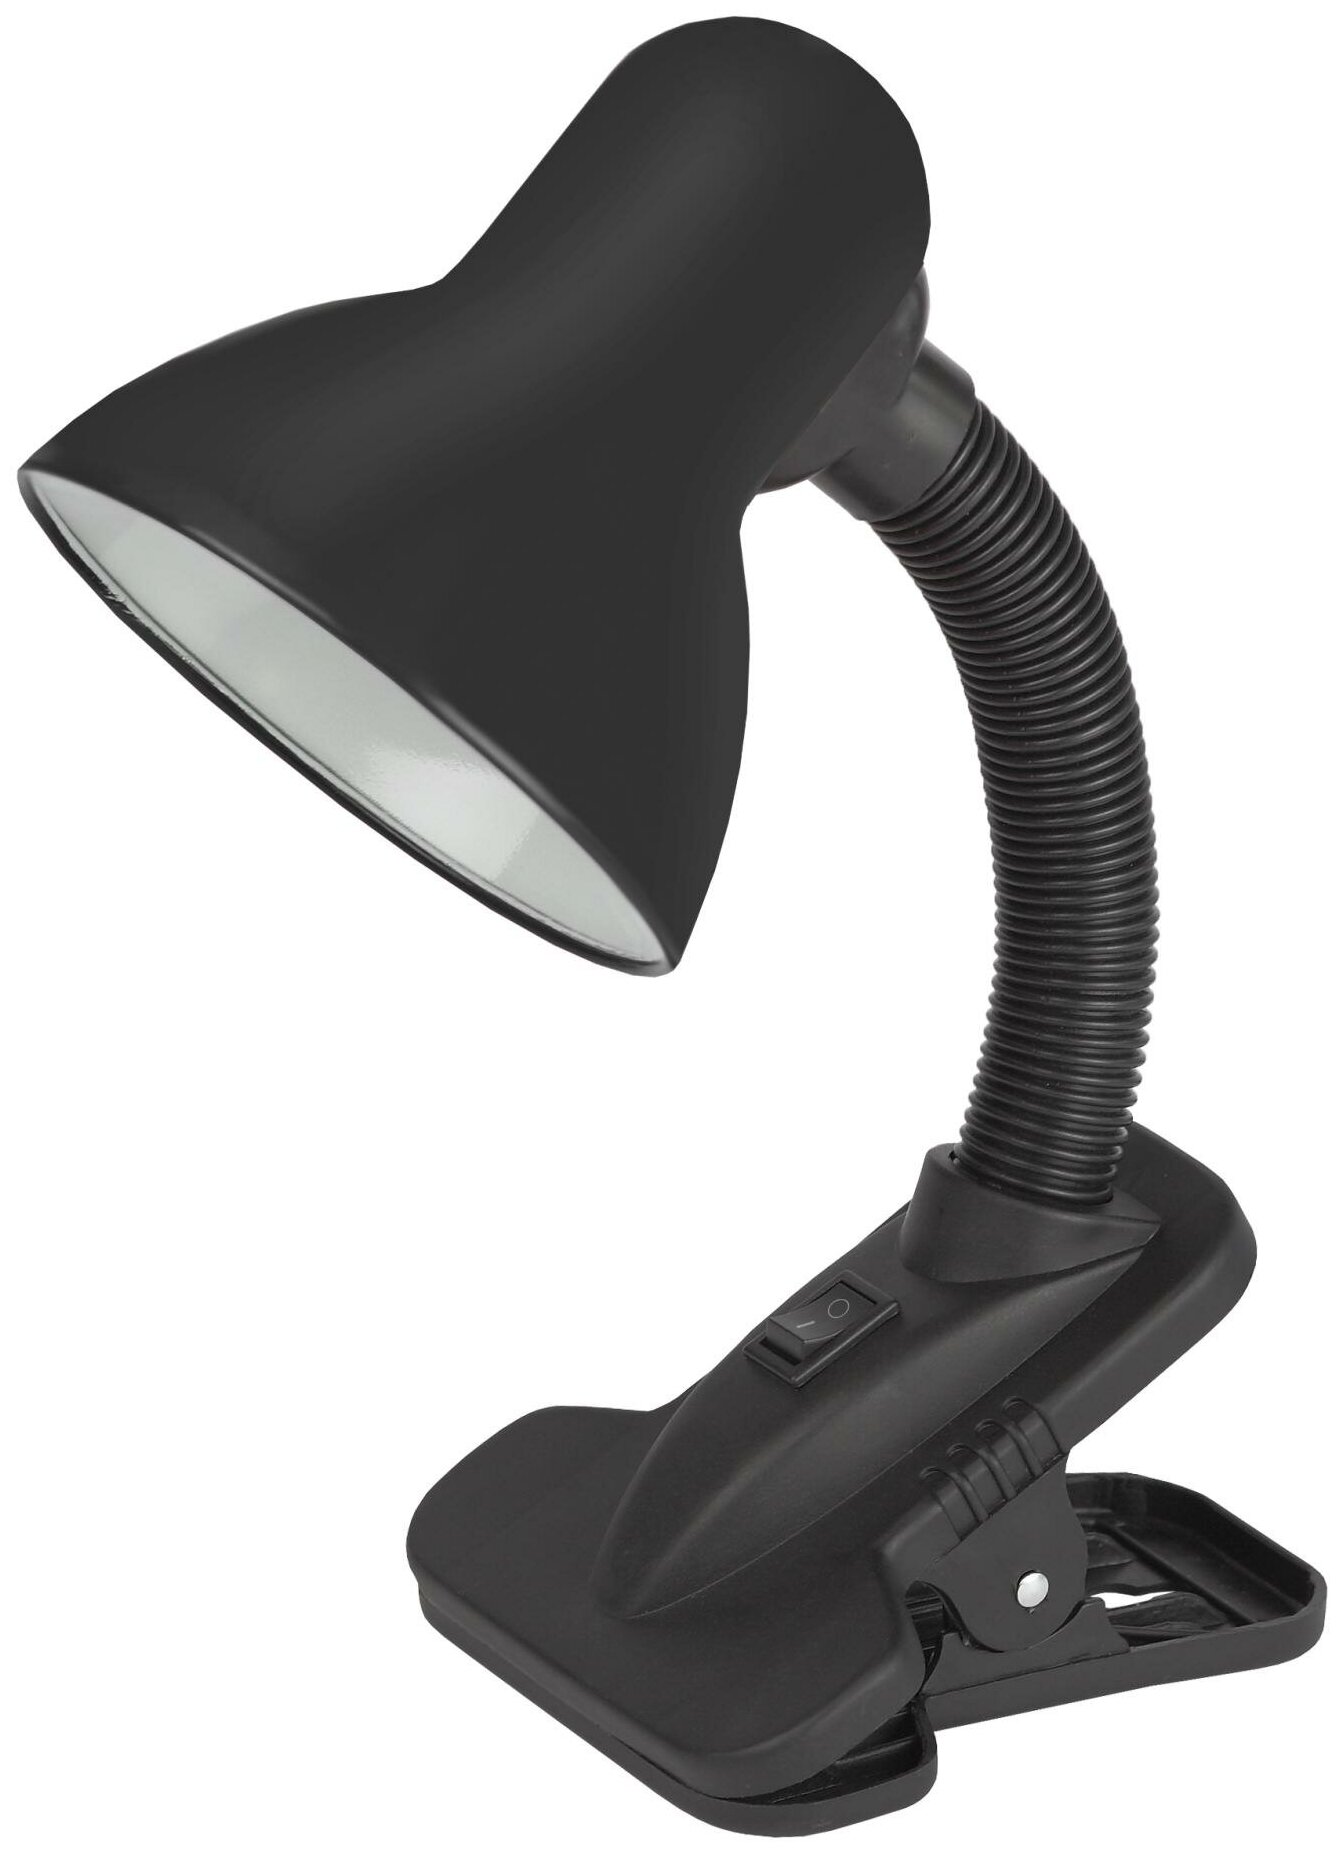 N-212-E27-40W-BK Настольный светильник ЭРА N-212-E27-40W-BK на прищепке черный, цена за 1 шт